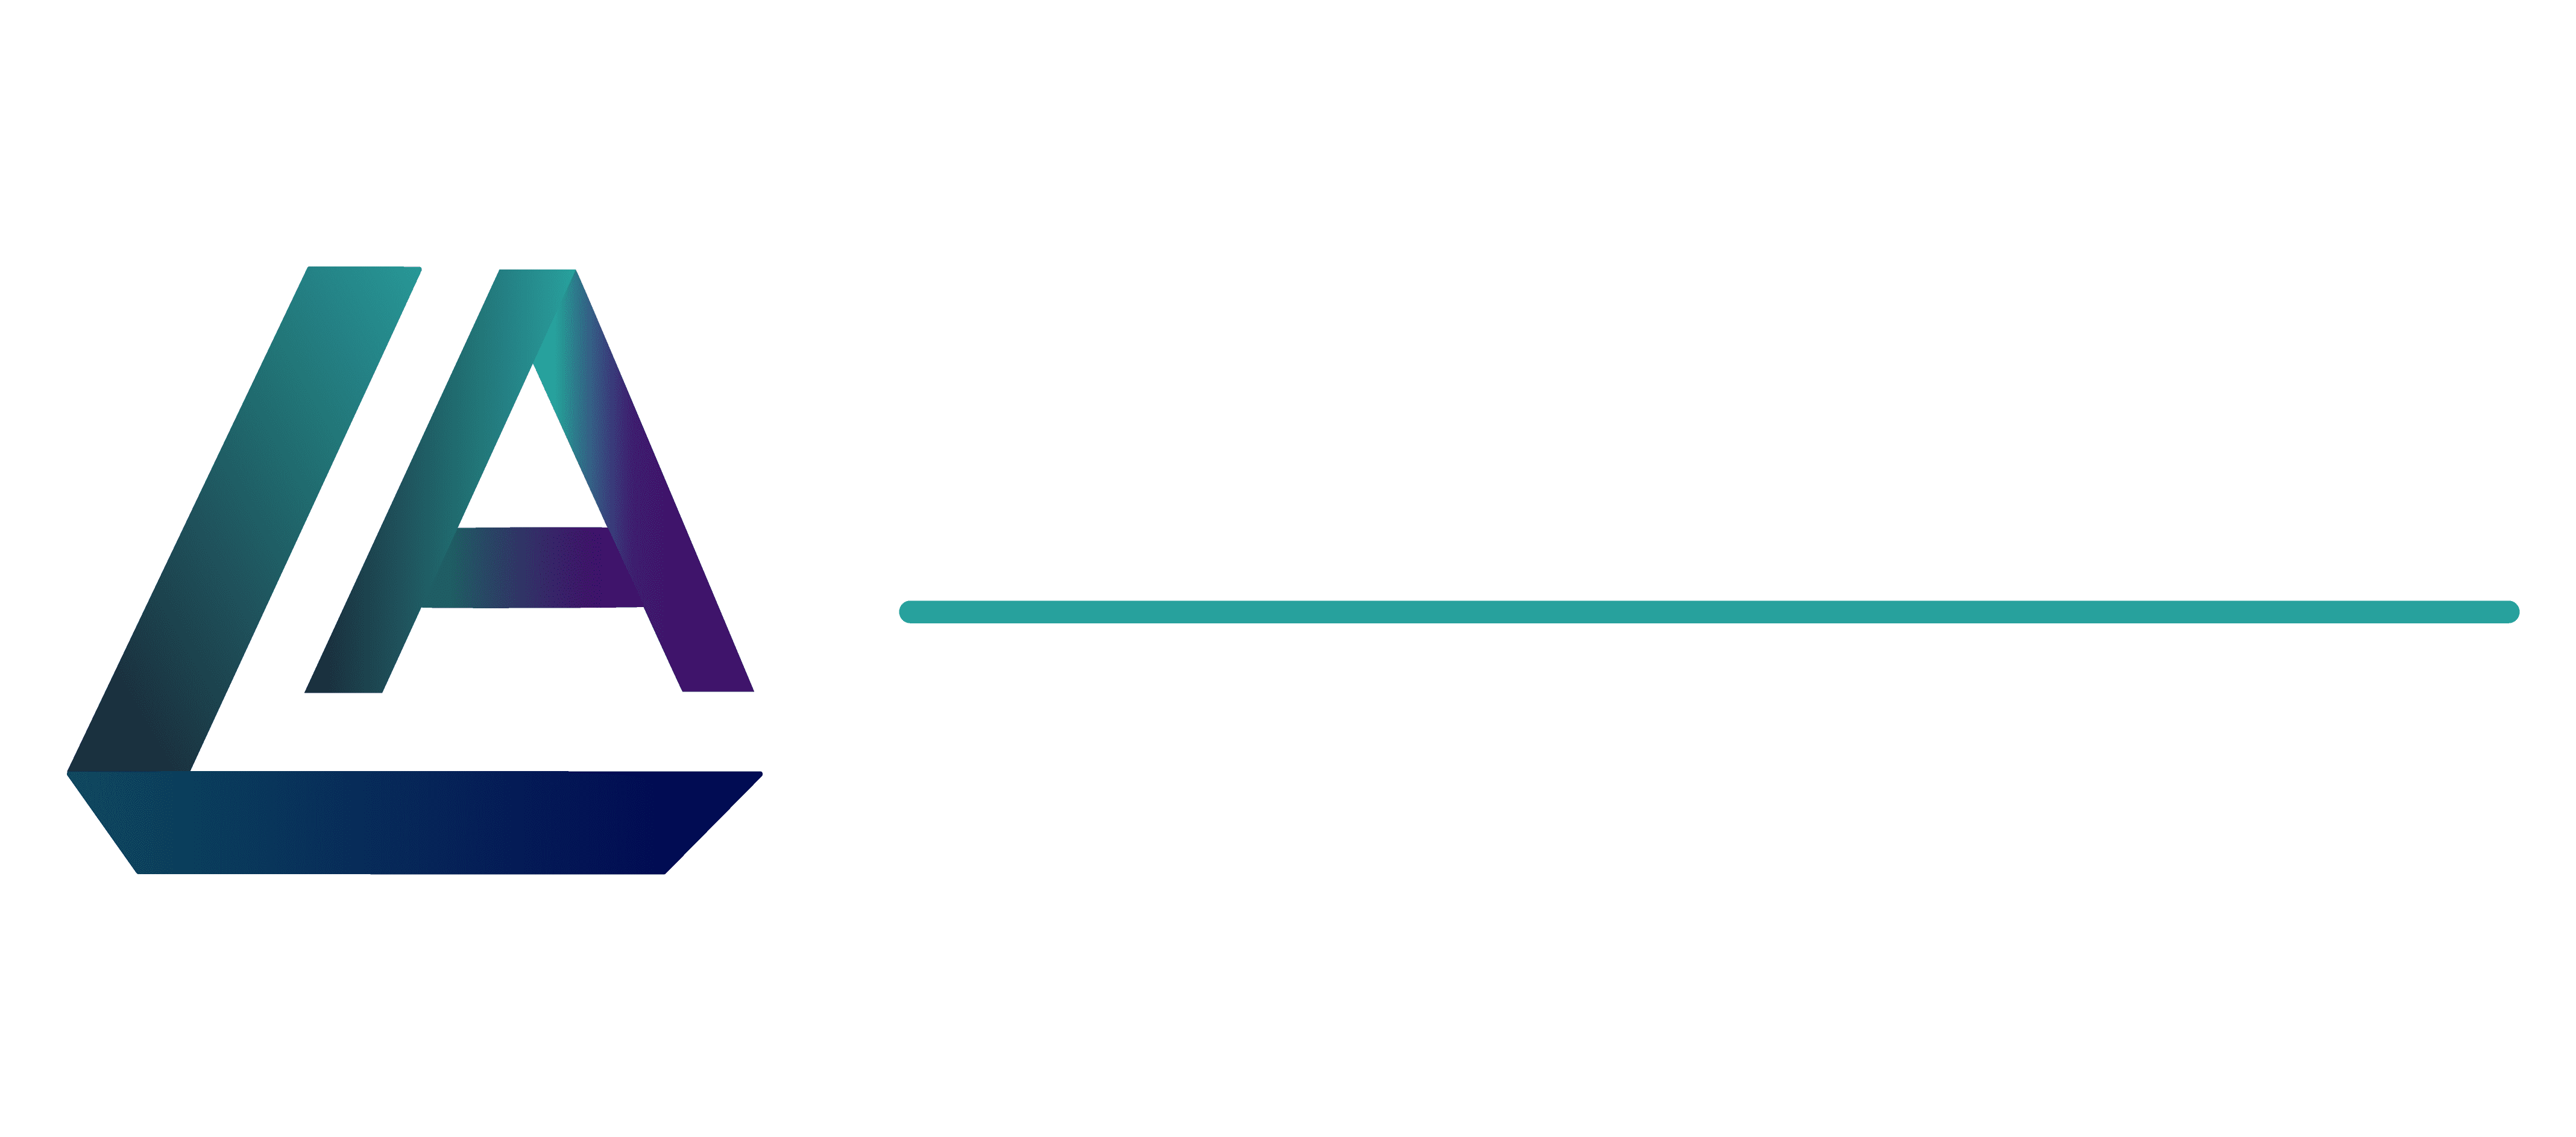 L.A. Creative Marketing Agency